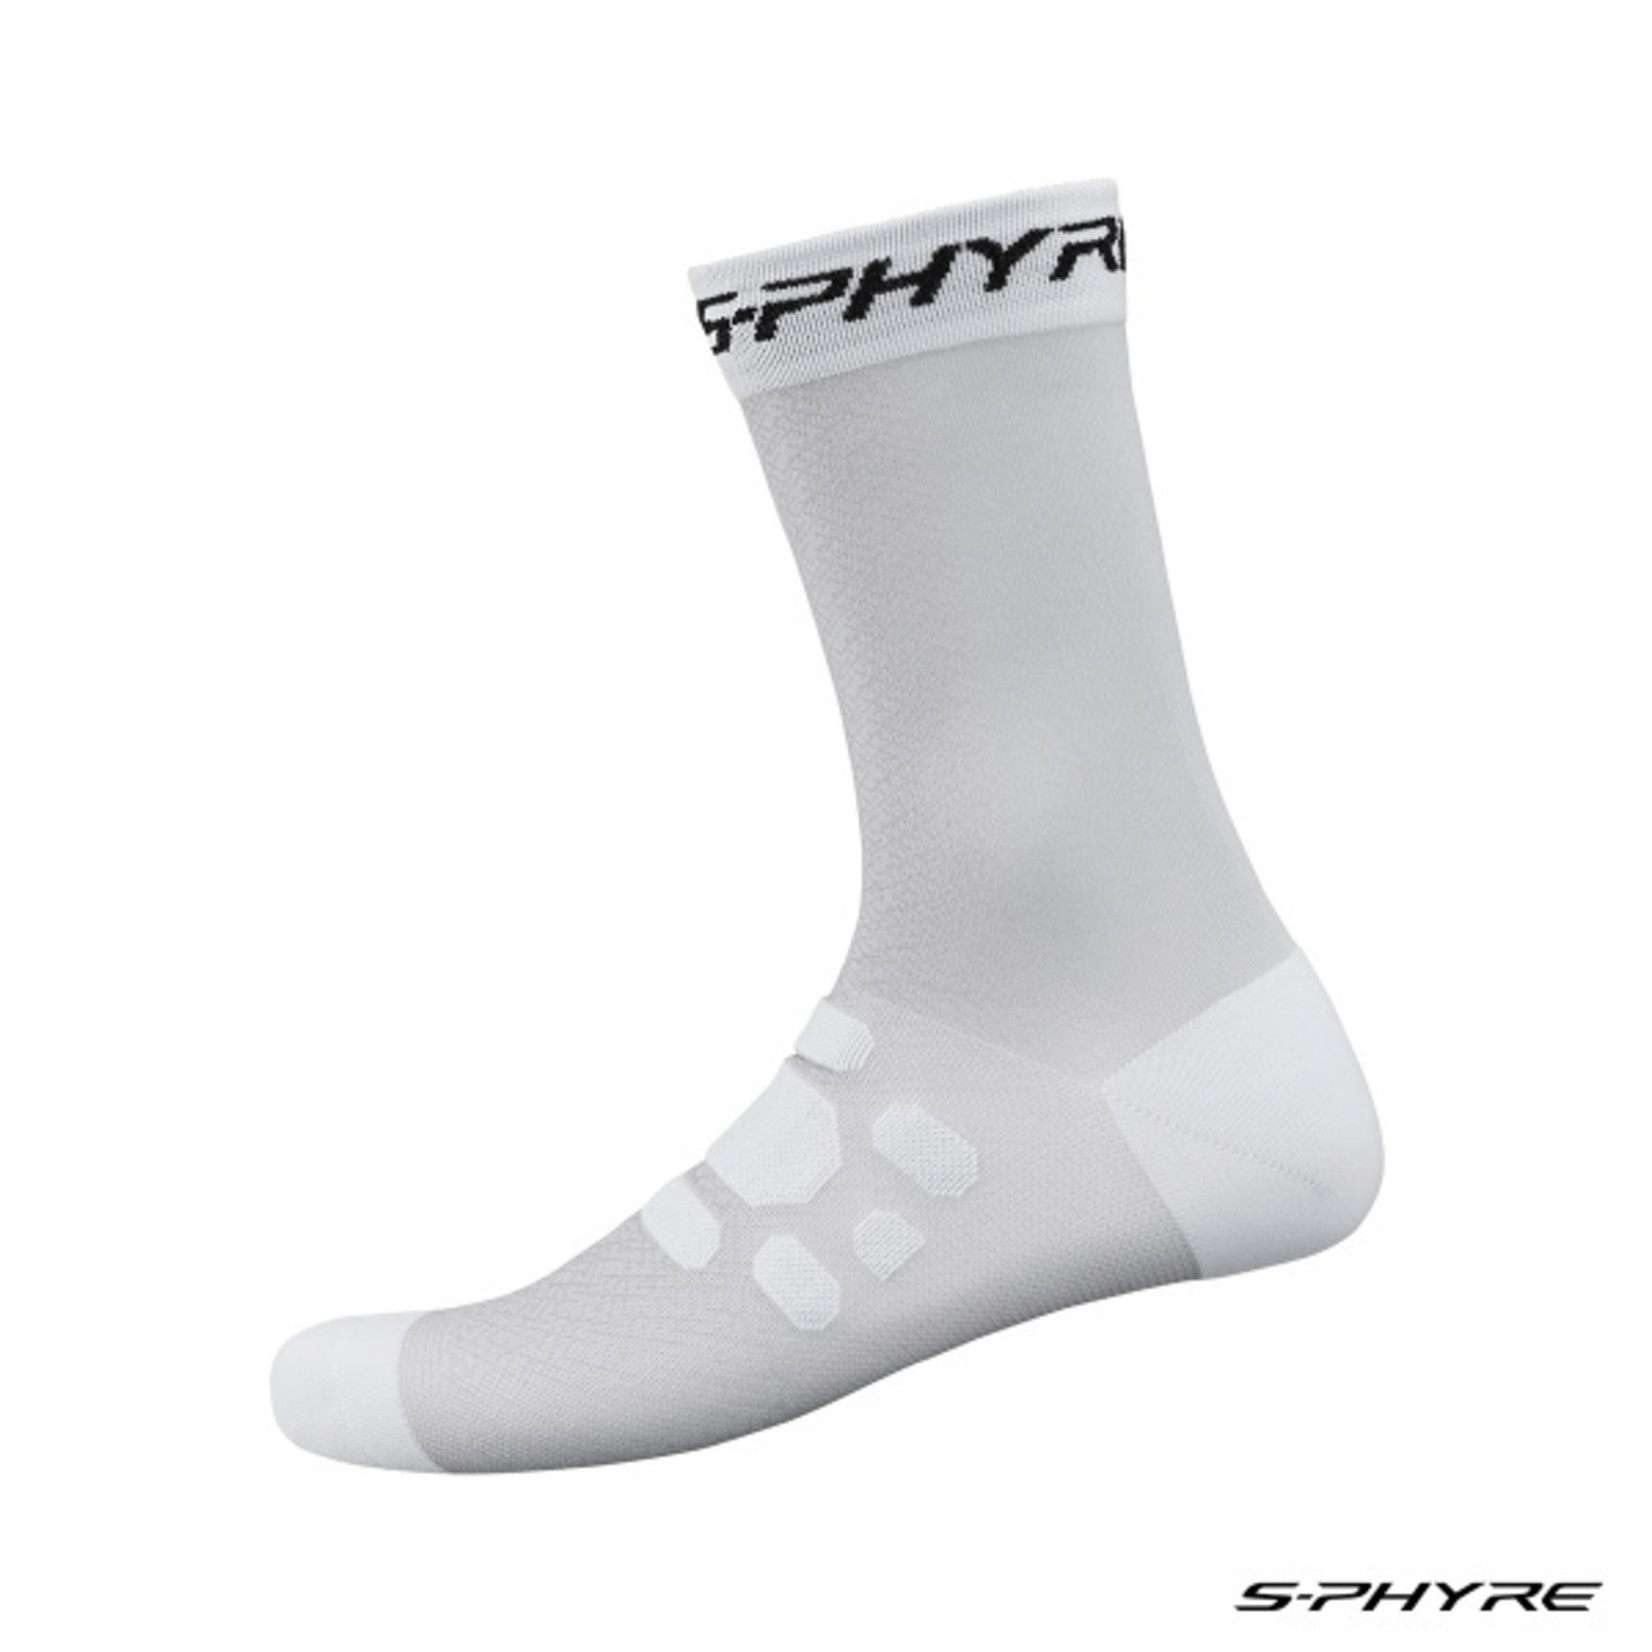 Shimano Shimano S-Phyre Tall Socks - MY21